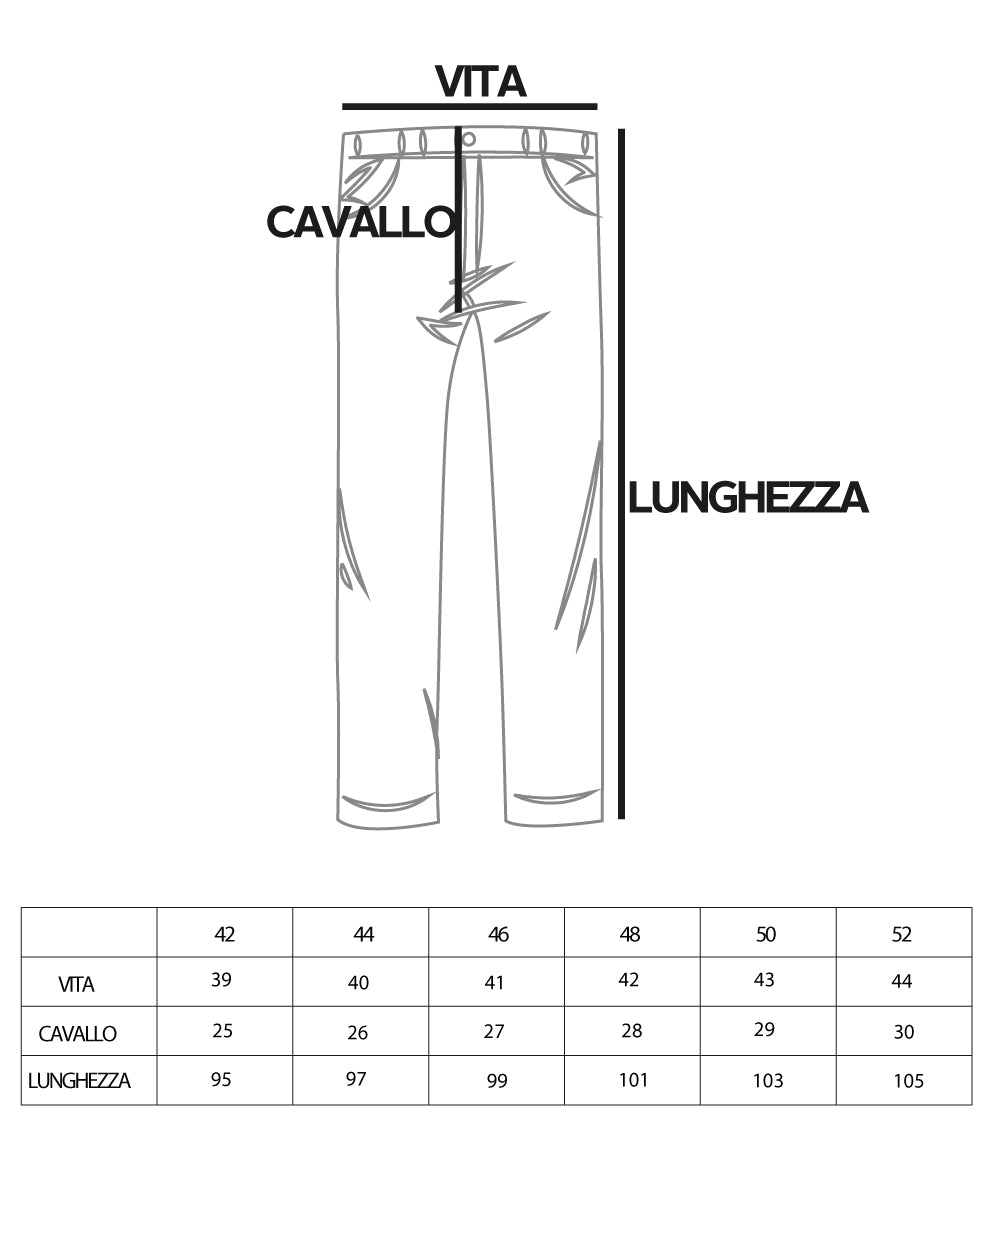 Pantaloni Uomo Tasca America Lungo Classico Slim Nero GIOSAL-P5405A